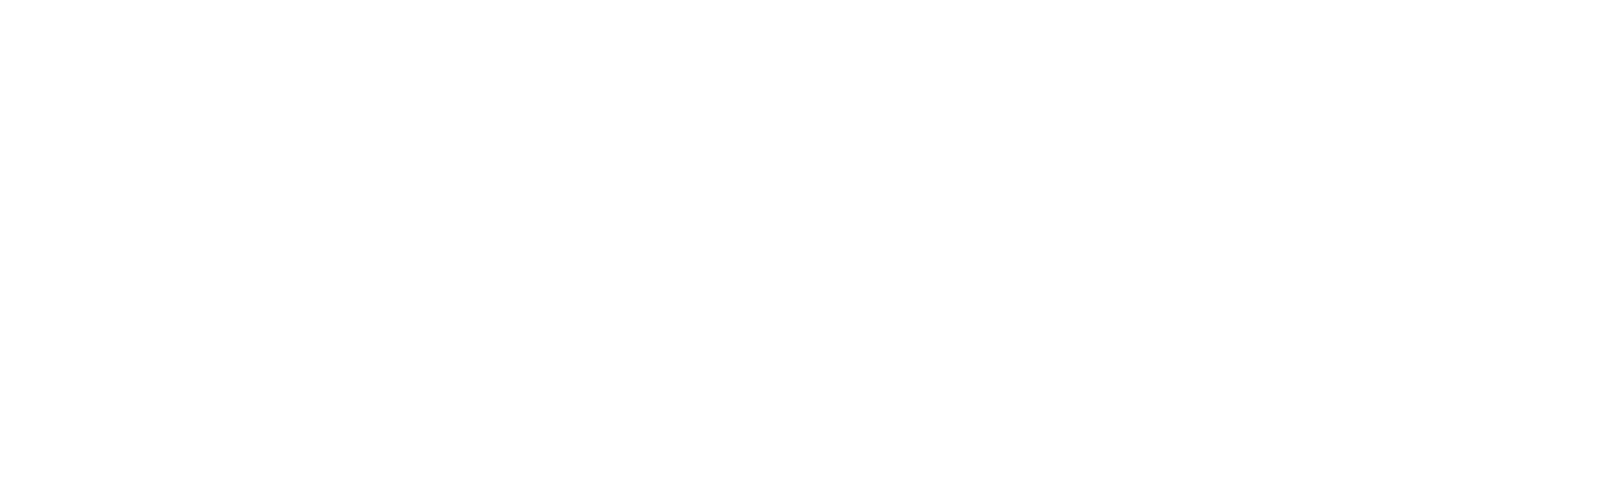 Asensus Surgical logo large for dark backgrounds (transparent PNG)